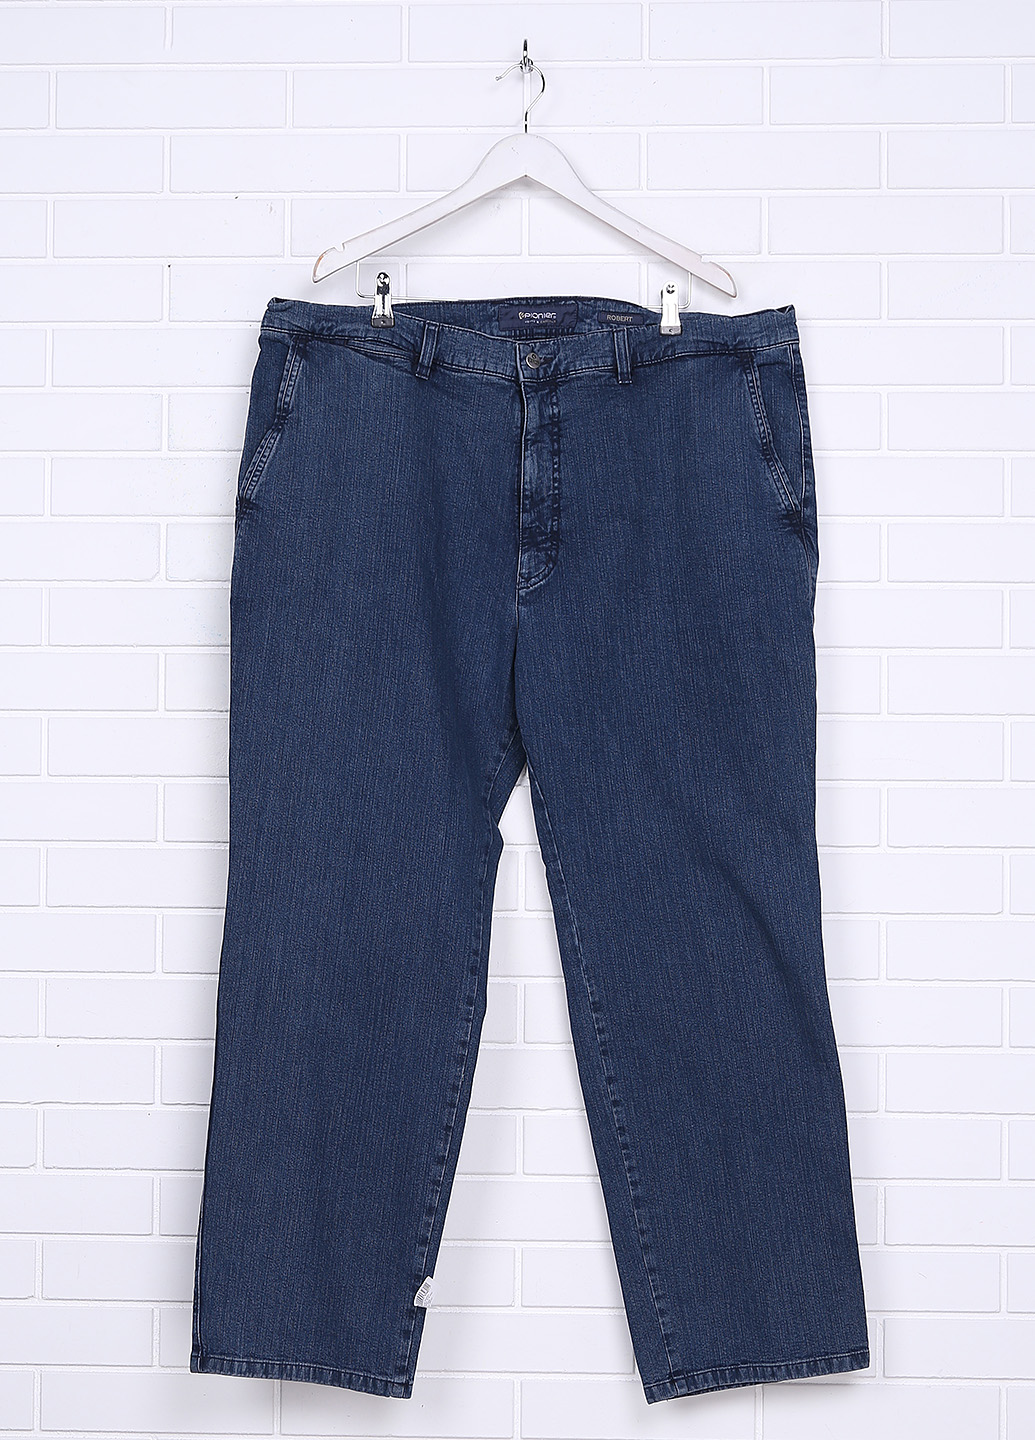 Мужские джинсы Pioneer 56/34 Синий (P-6-004)